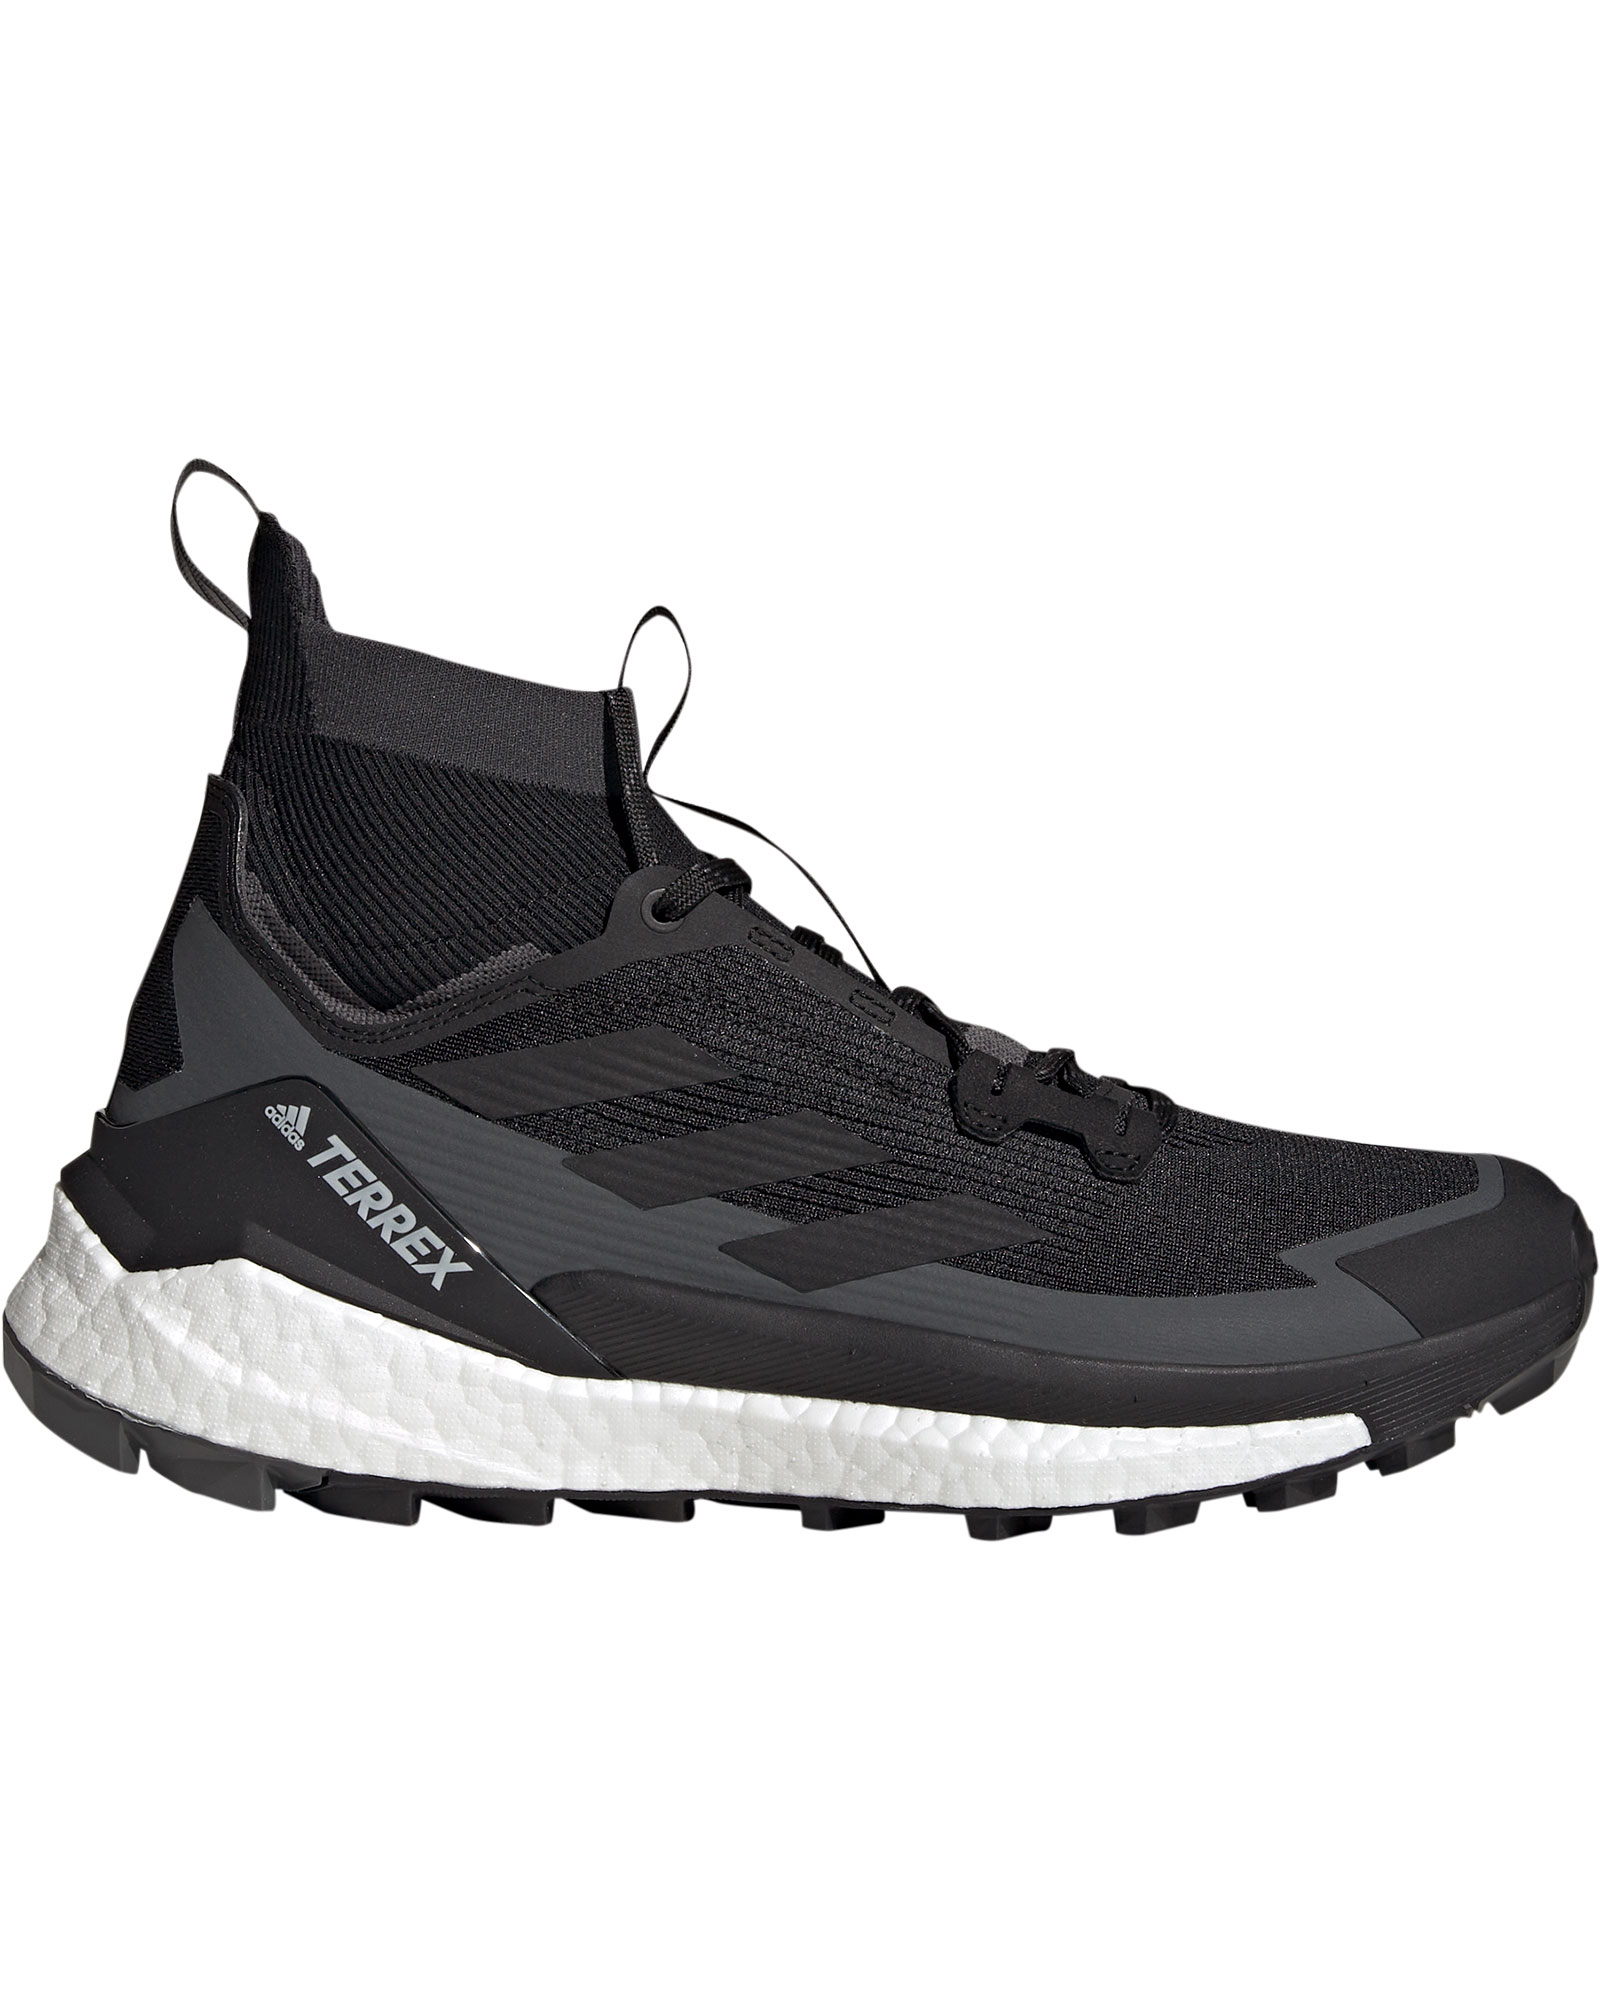 adidas TERREX Free Hiker 2 Men’s Boots - Core Black/Grey Six/Carbon UK 8